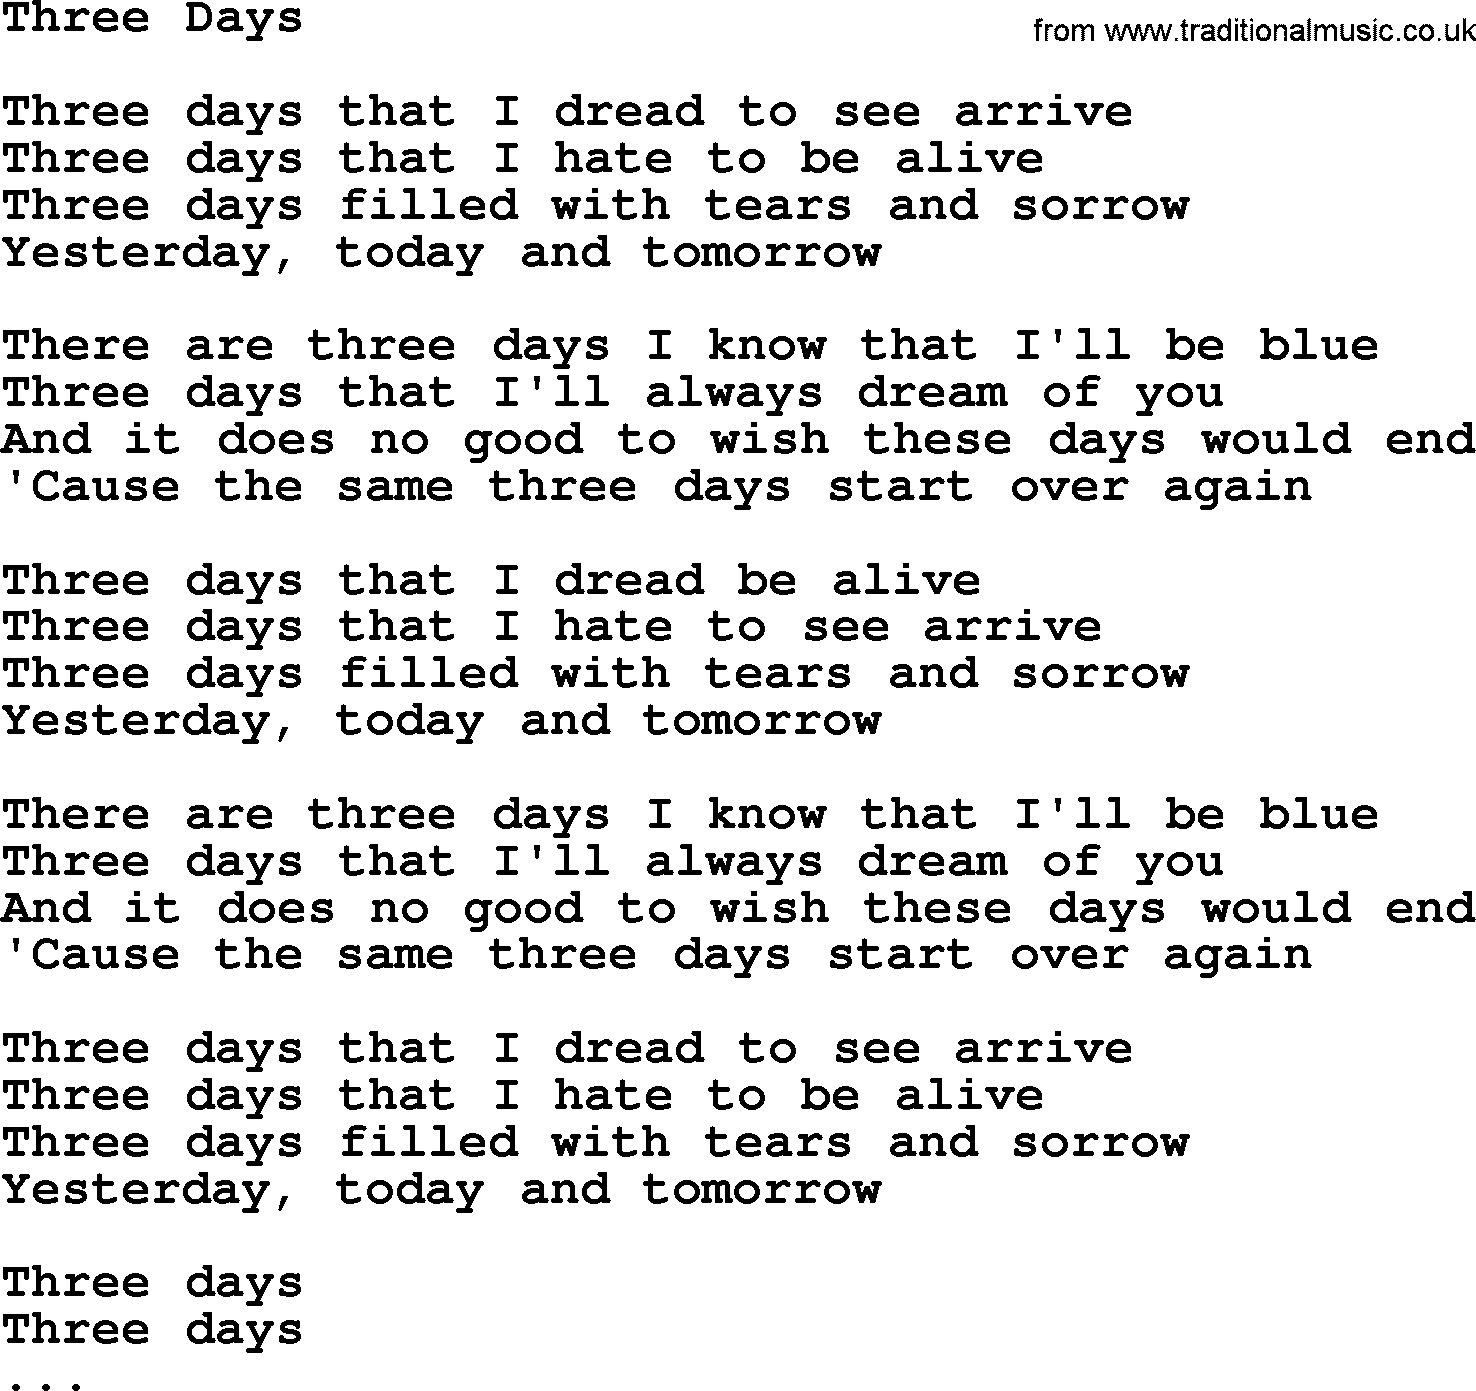 Willie Nelson song: Three Days lyrics